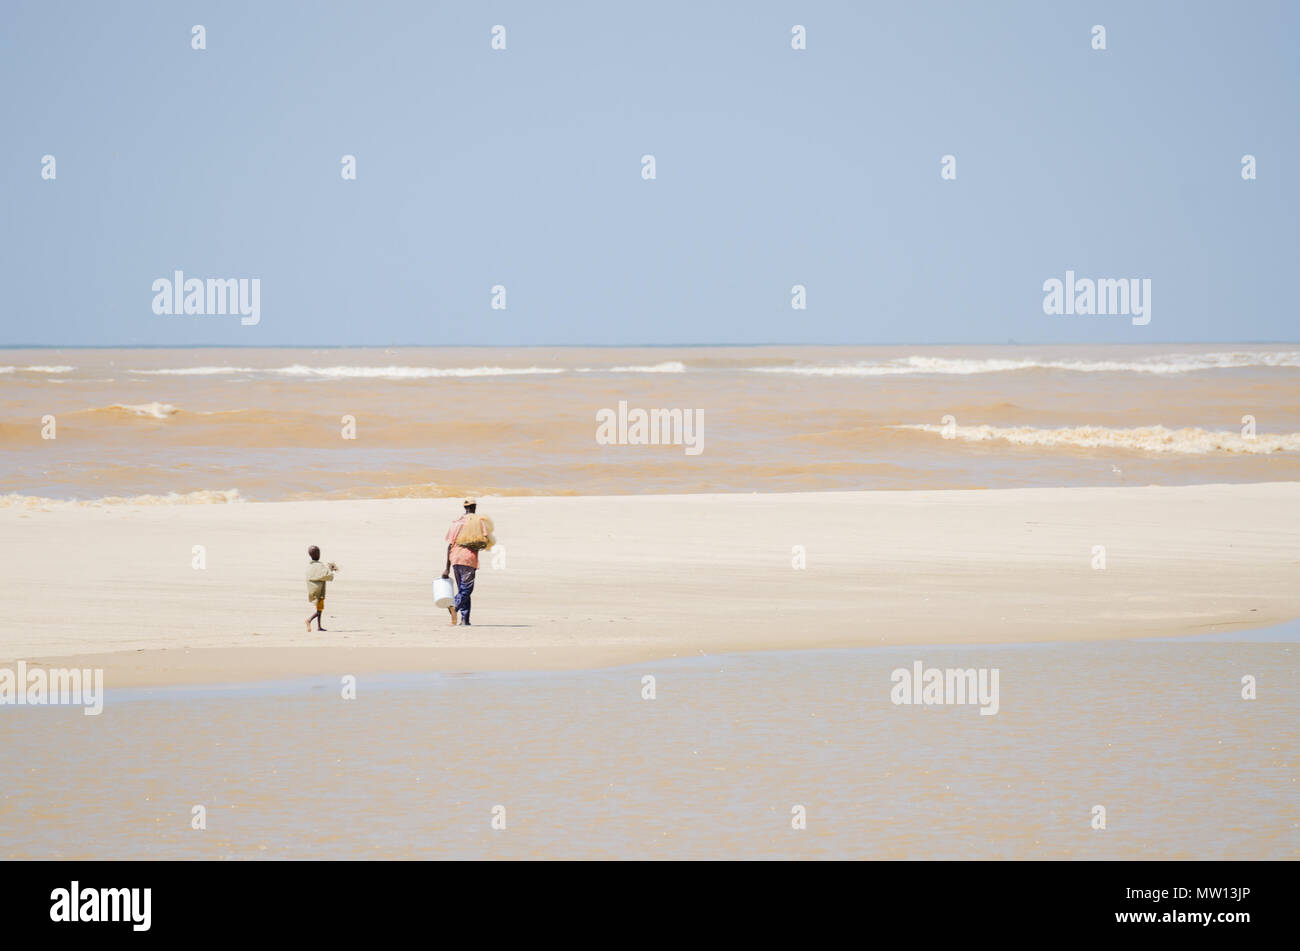 St Louis, Senegal - October 12, 2013: African fisherman and his son walking along ocean at beach. Stock Photo